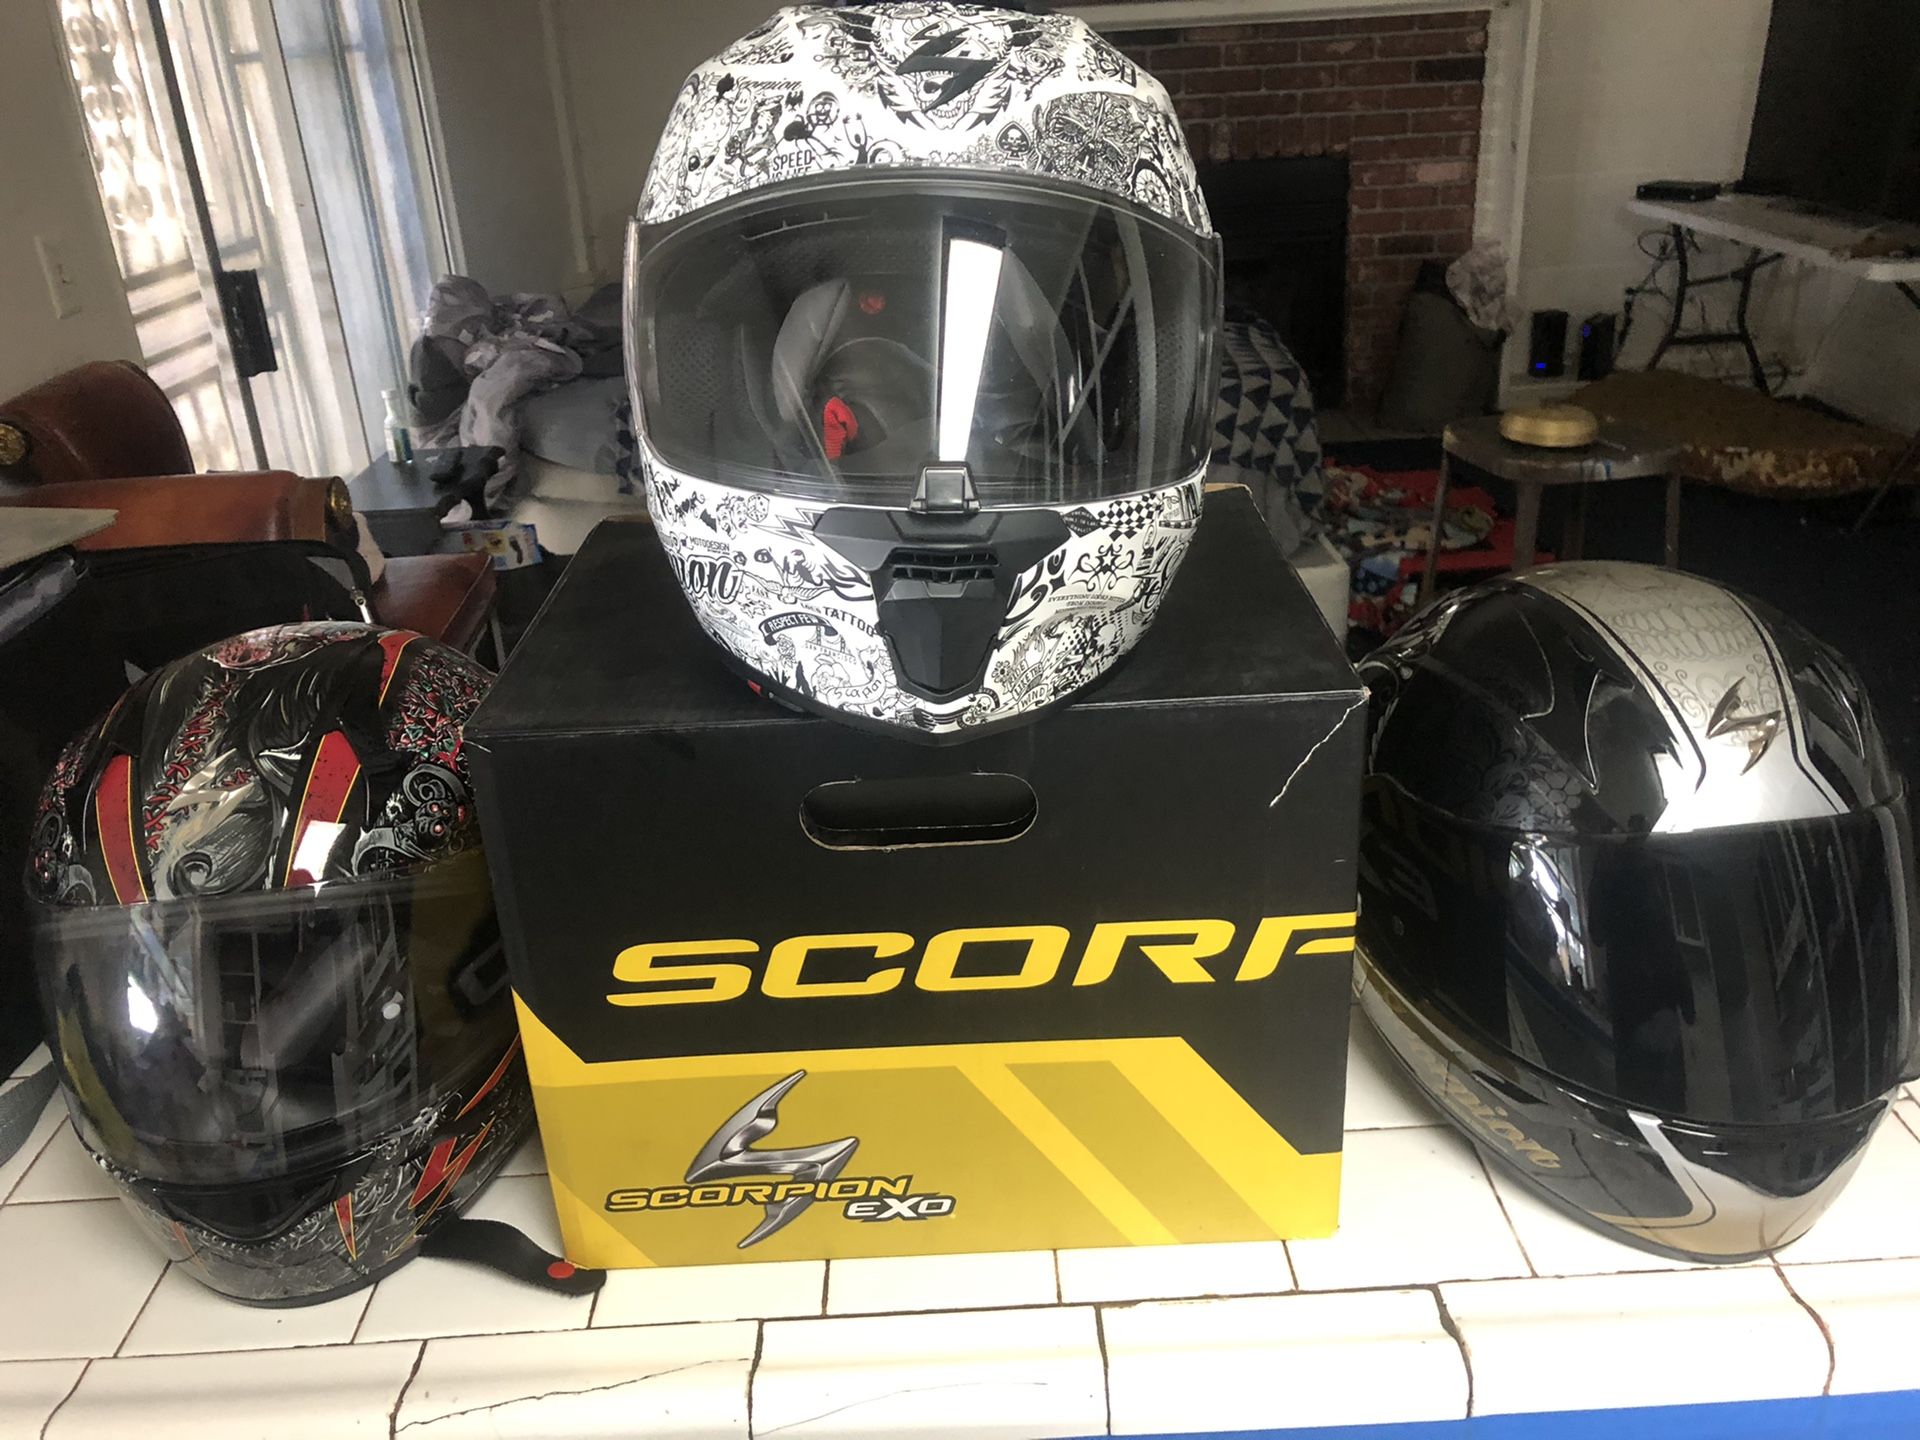 Motorcycle gear - icon jacket. Scorpion helmets. Shogun Frame sliders.